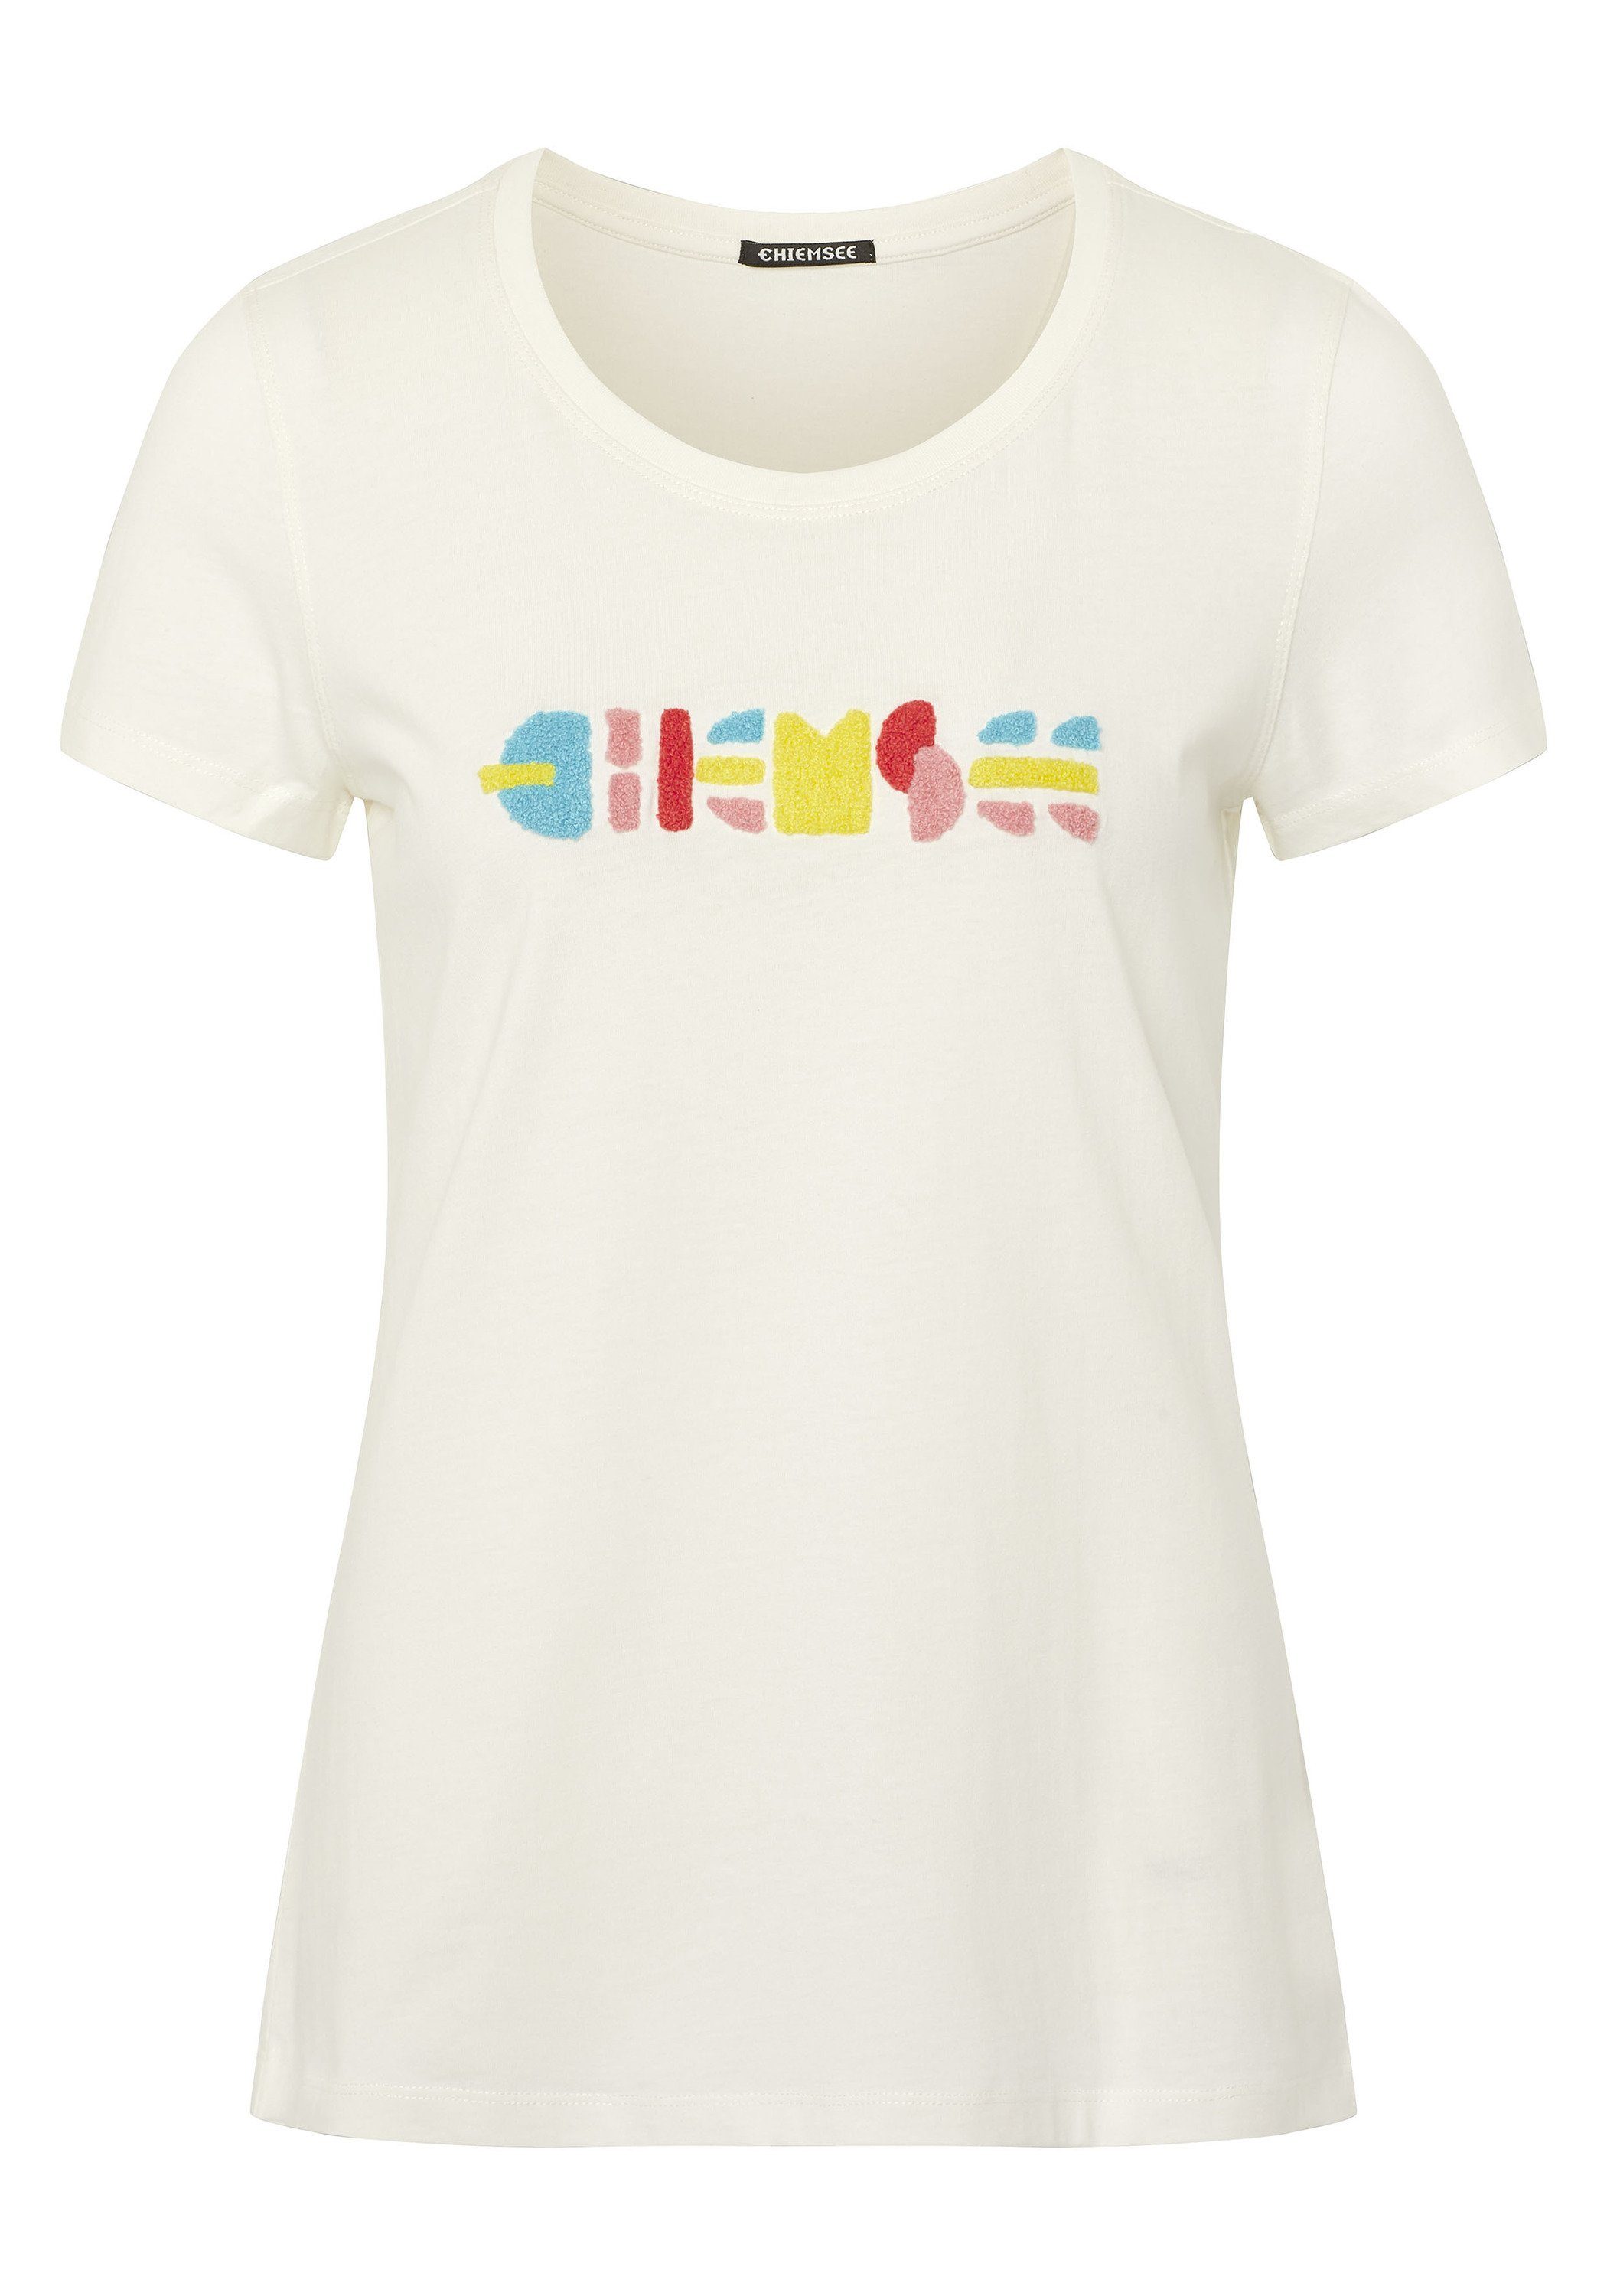 Chiemsee Print-Shirt T-Shirt mit flauschigem Multicolour-Logo 1 11-4202 Star White